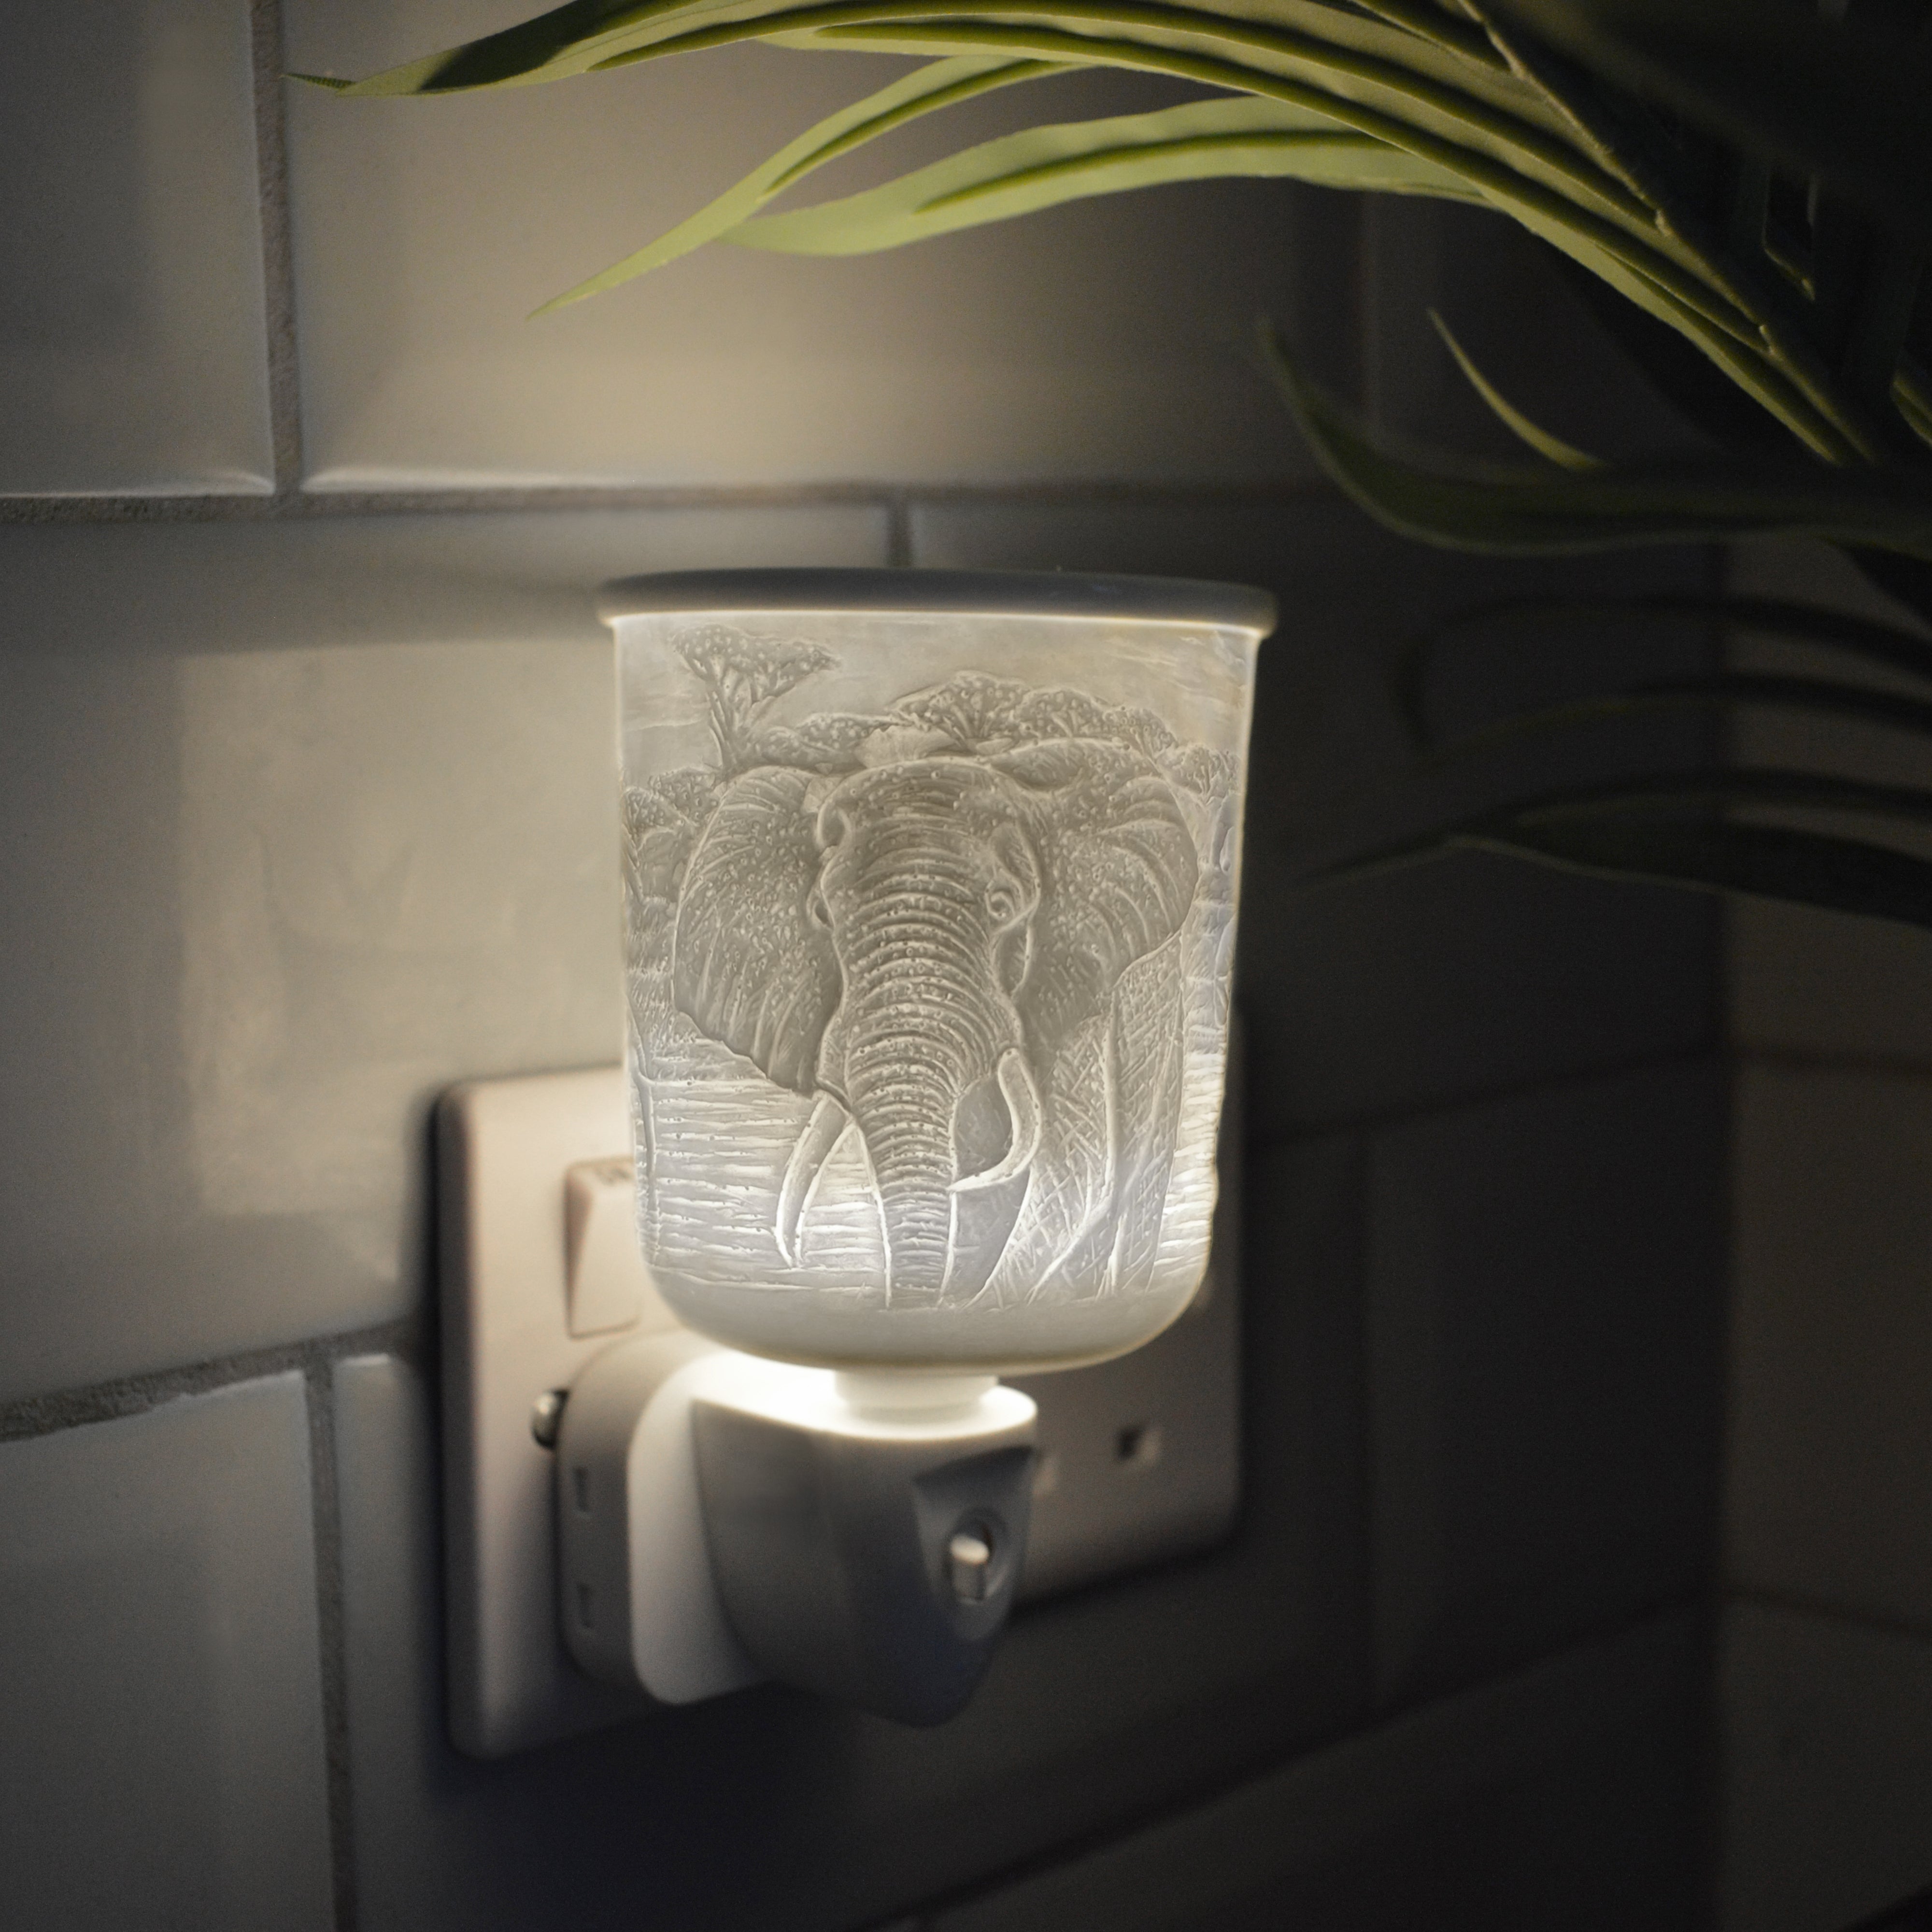 Porcelain Plug In Electric Wax Burner - Elephant